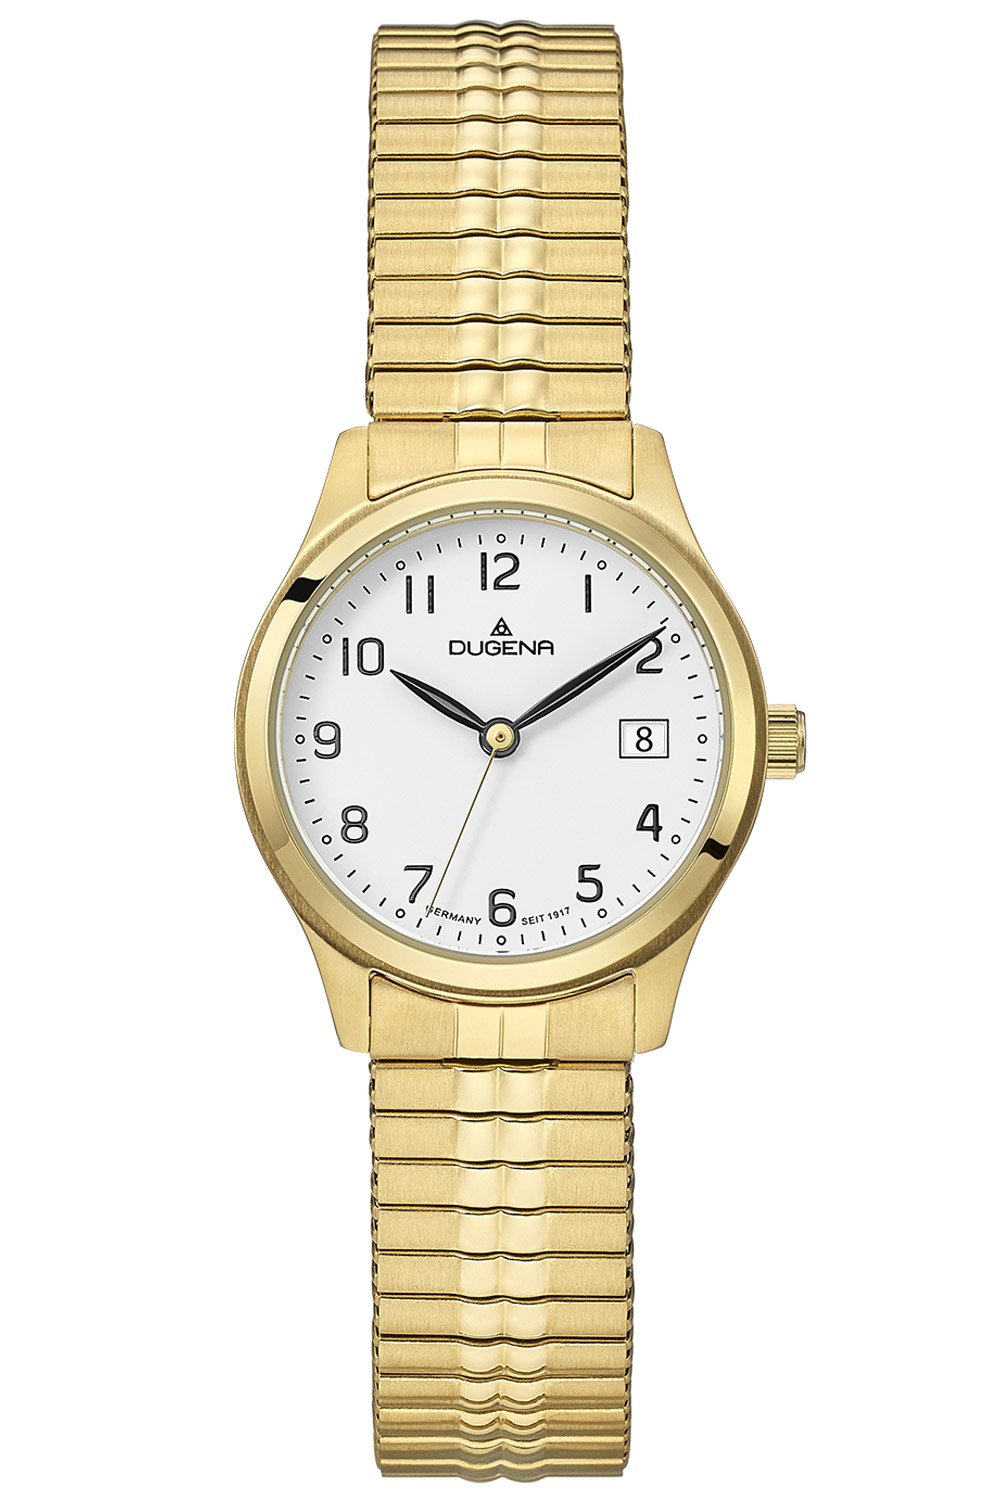 Dugena Women's Watch Bari Quartz with Elastic Strap 4460758-1 • uhrcenter